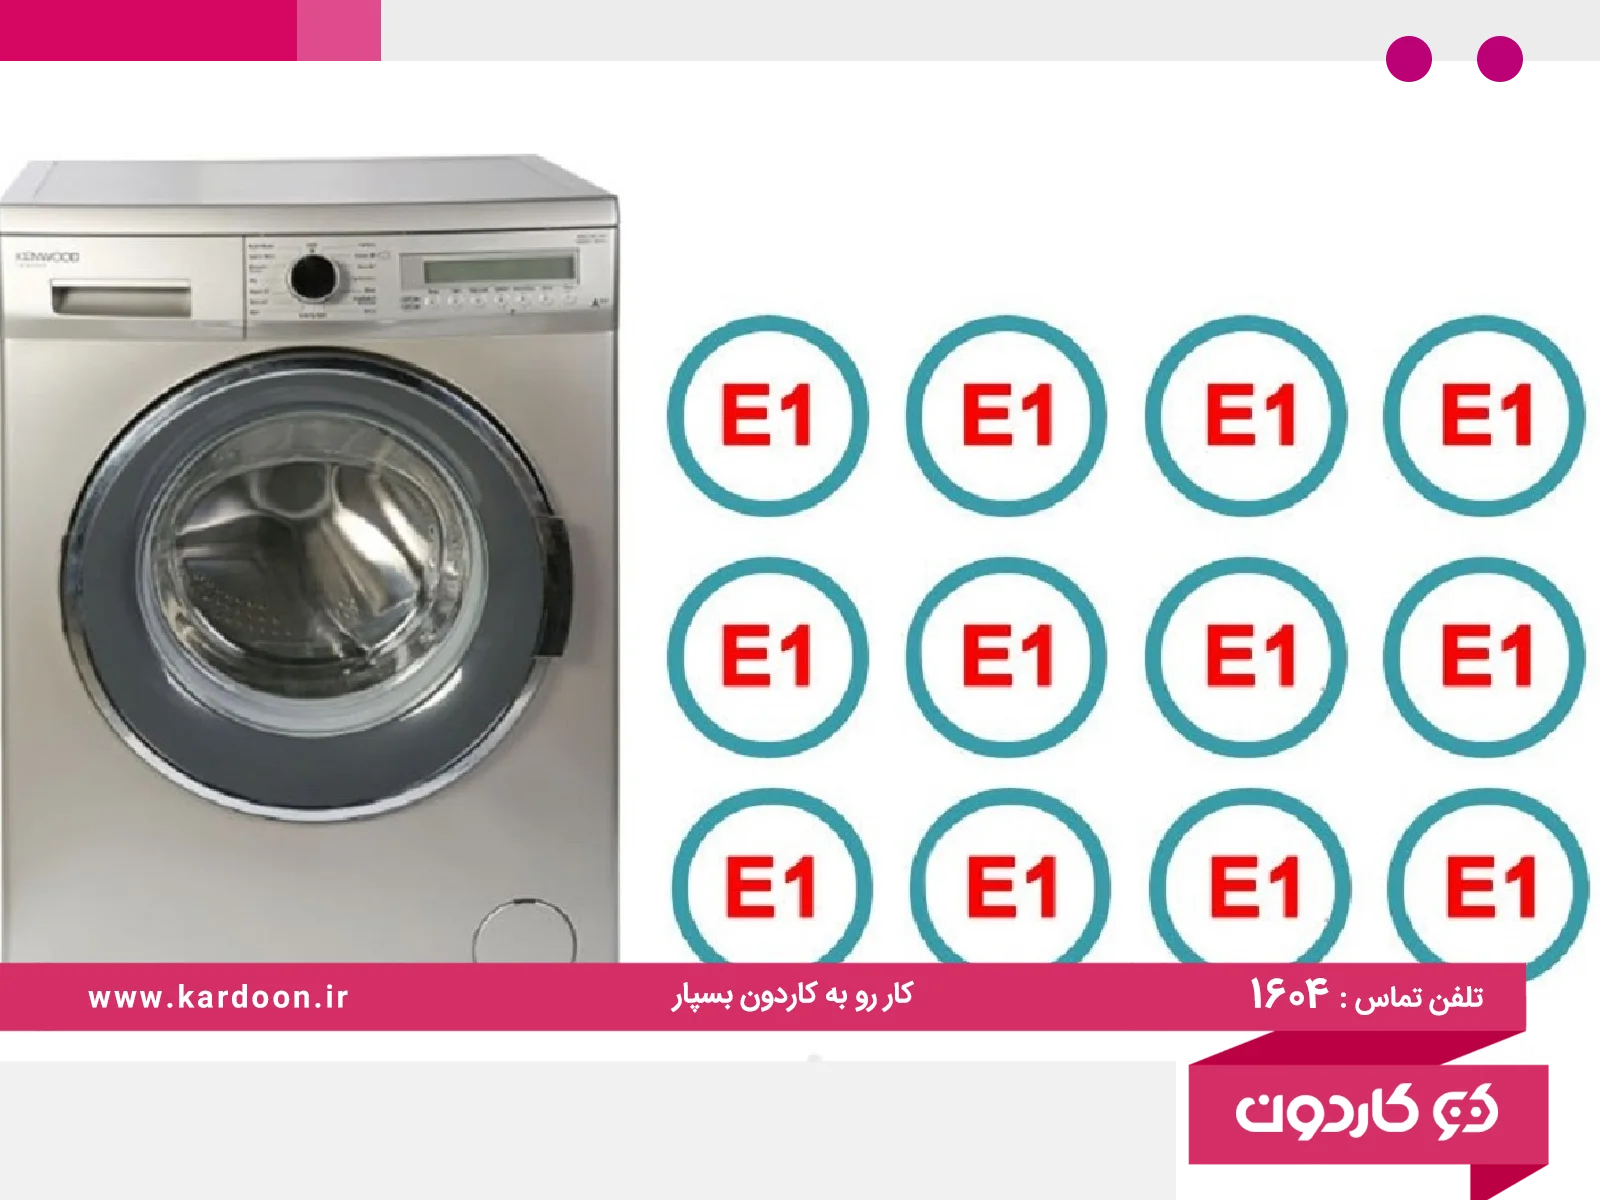 Kenwood washing machine error codes